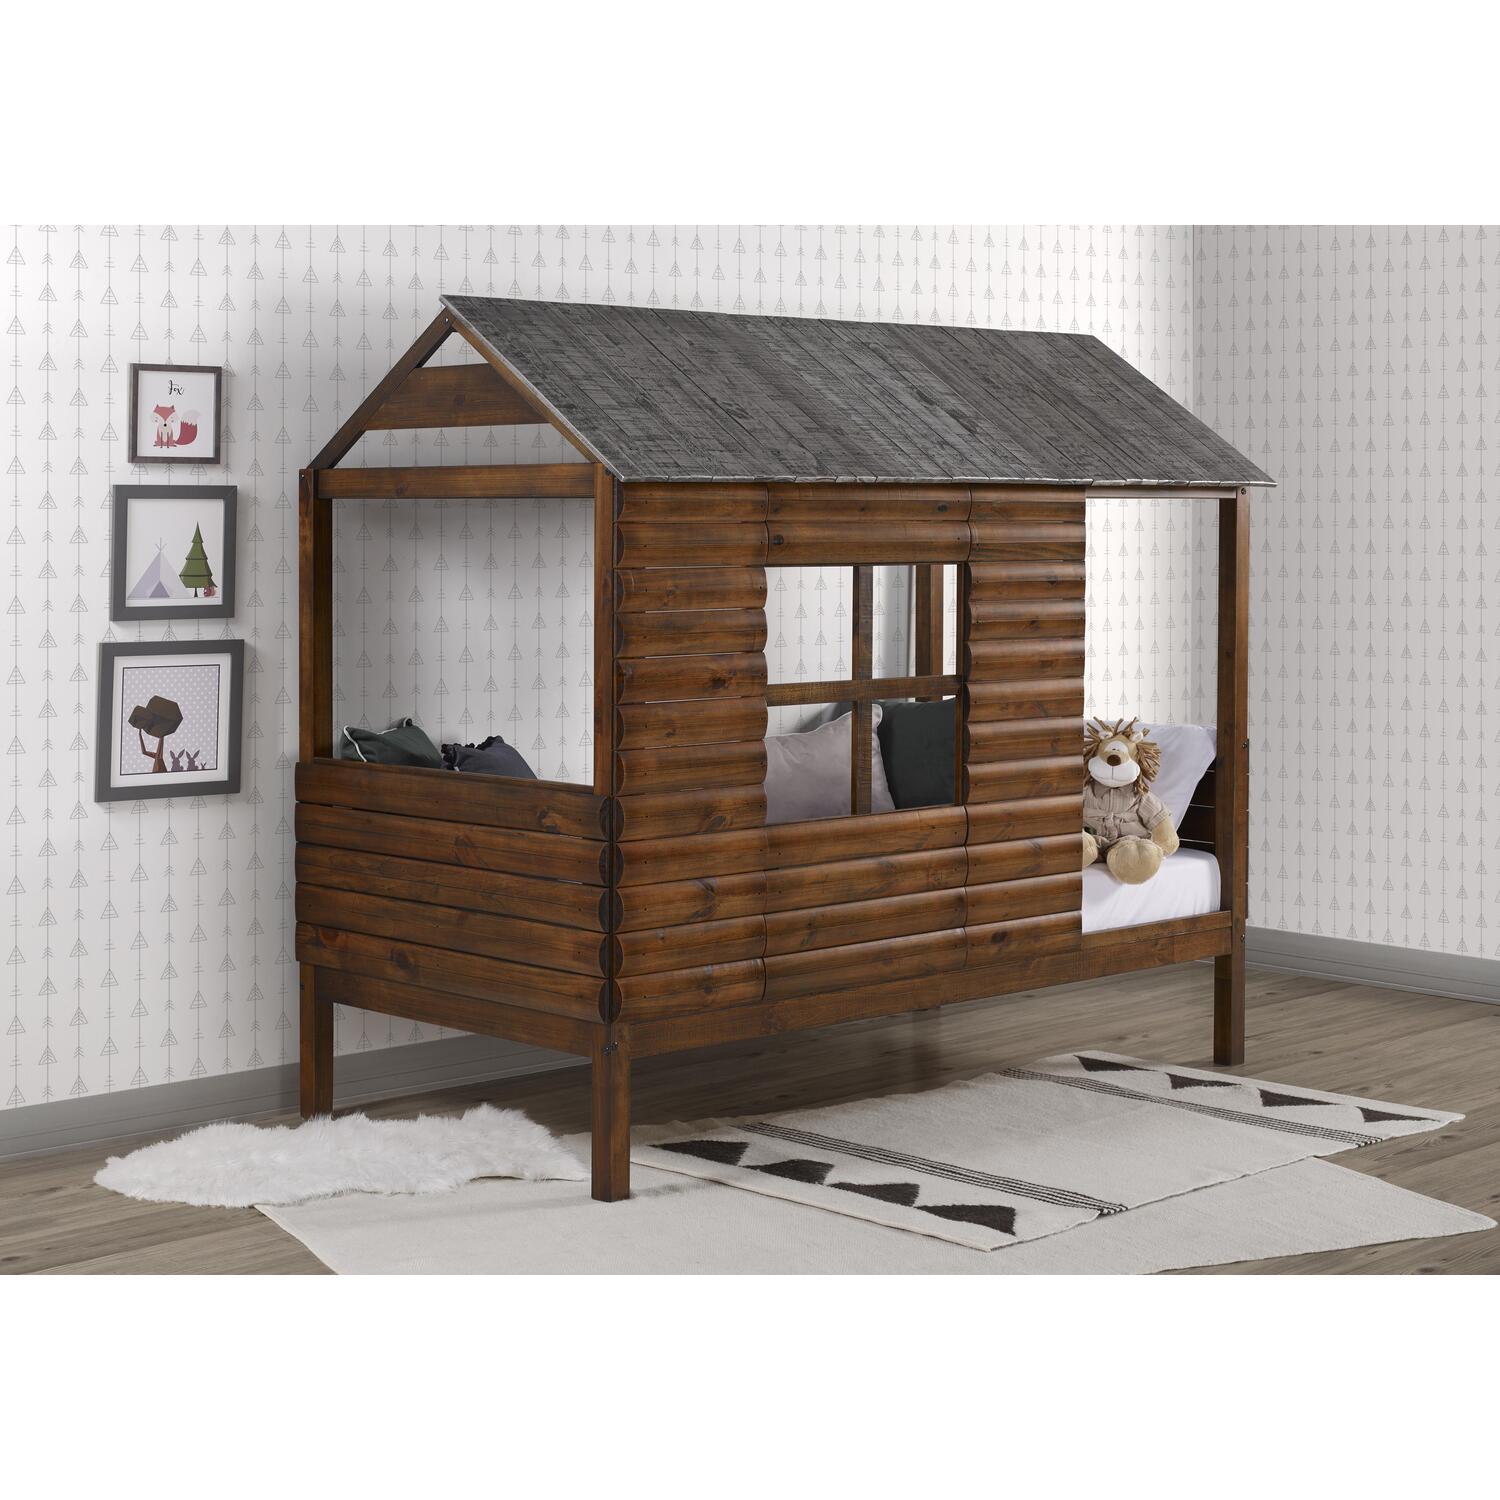 Donco Kids Log Cabin Low Loft Bed Rustic Walnut & Rustic Silver, Twin, Loft Only - image 1 of 3